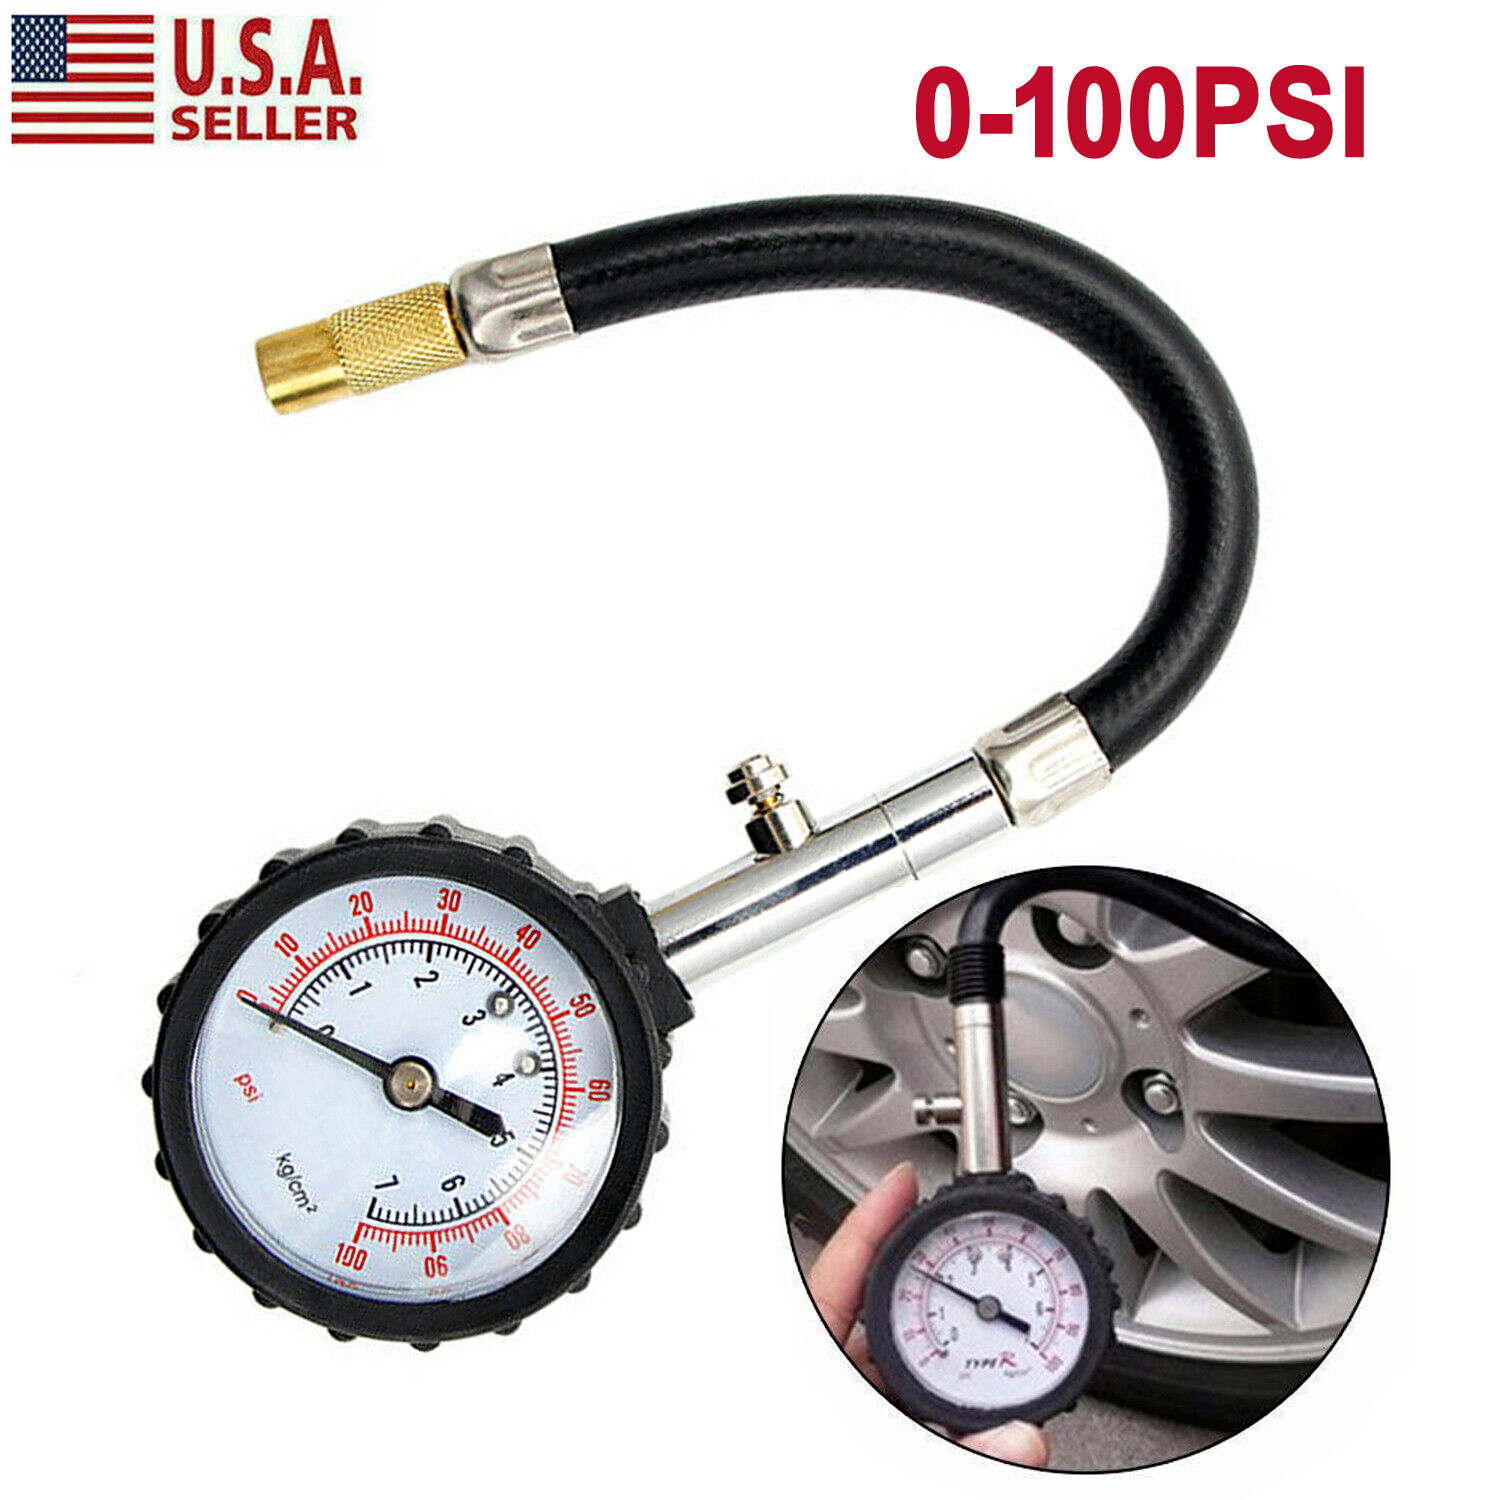 Motorcycle Tire Pressure Gauge 0-100 PSI Tire Gauge with Flexible Air Chuck